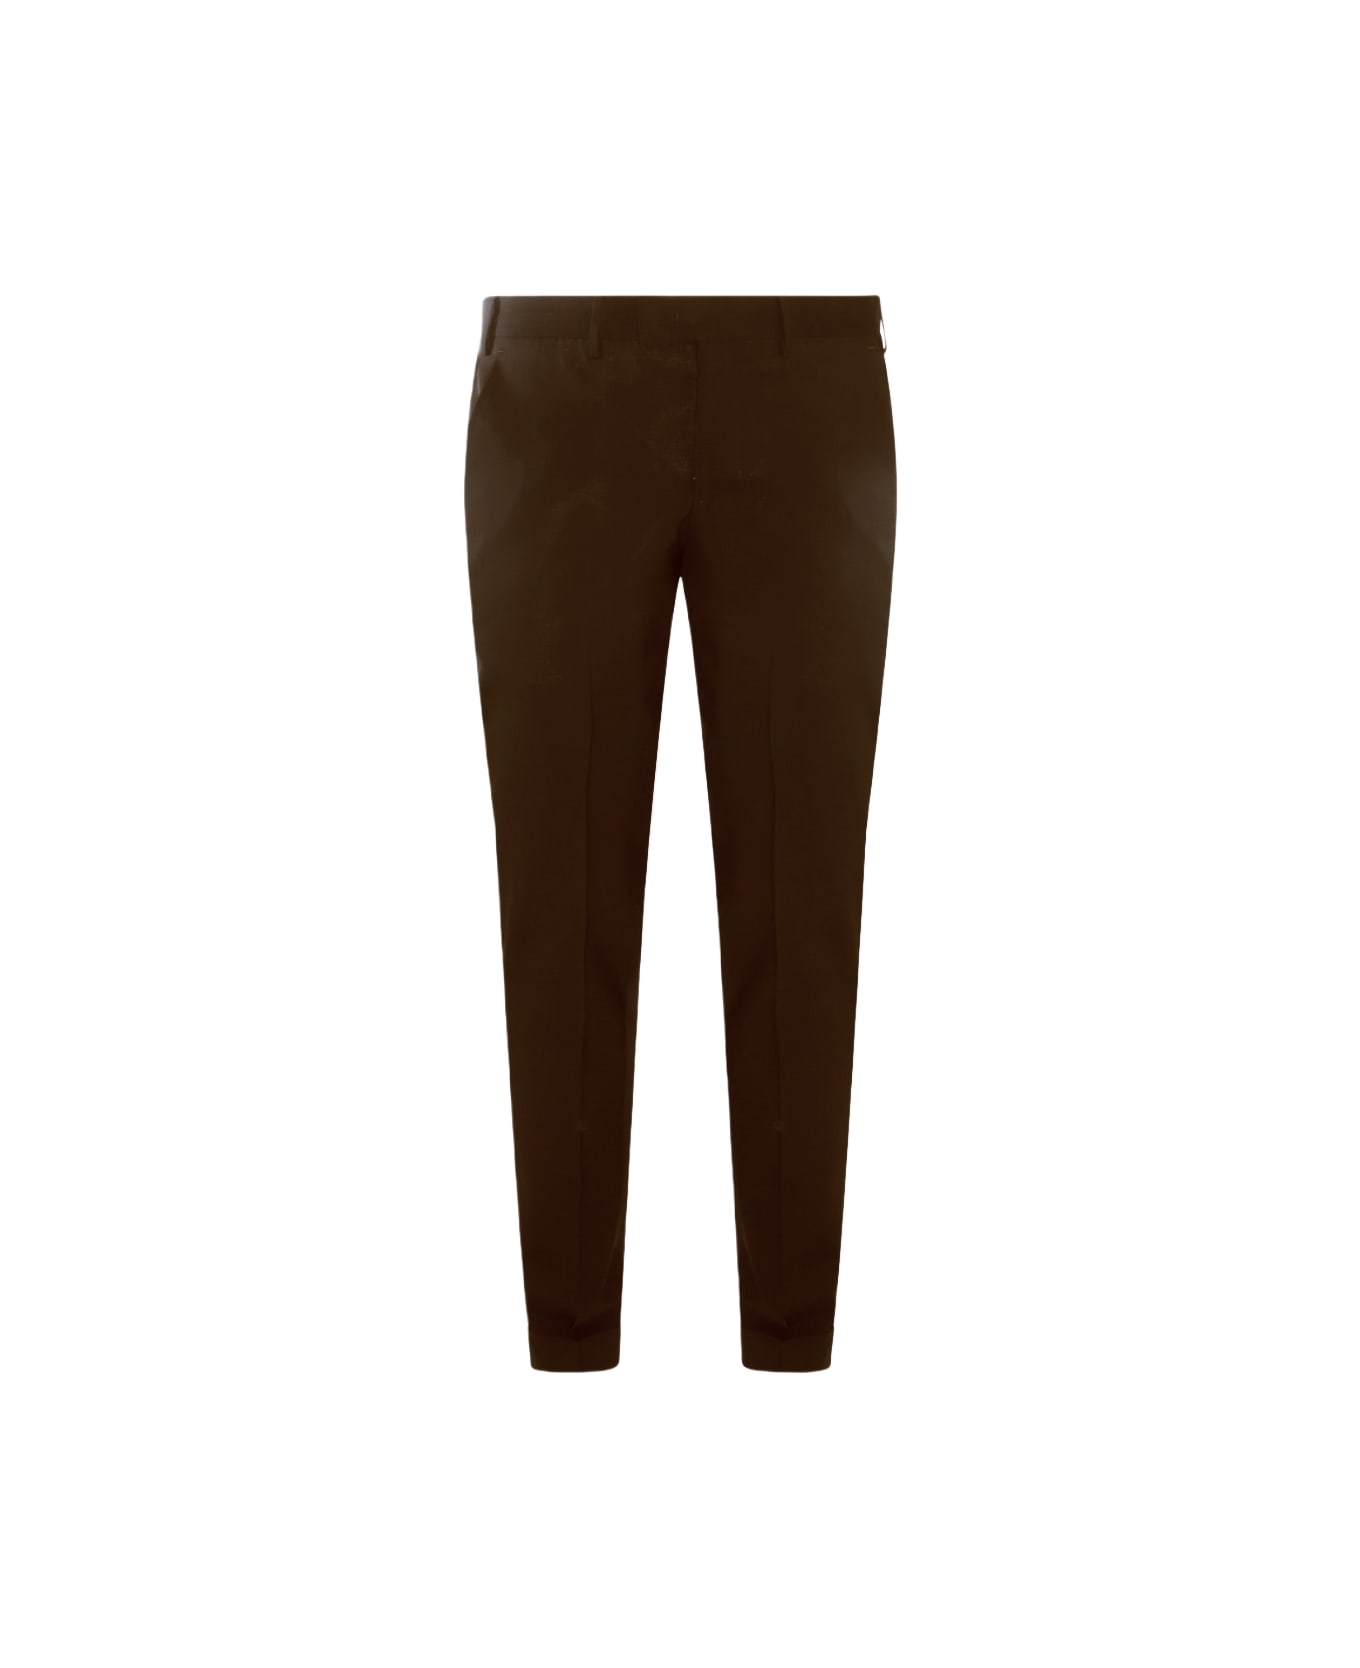 PT Torino Brown Wool Pants - Non definito